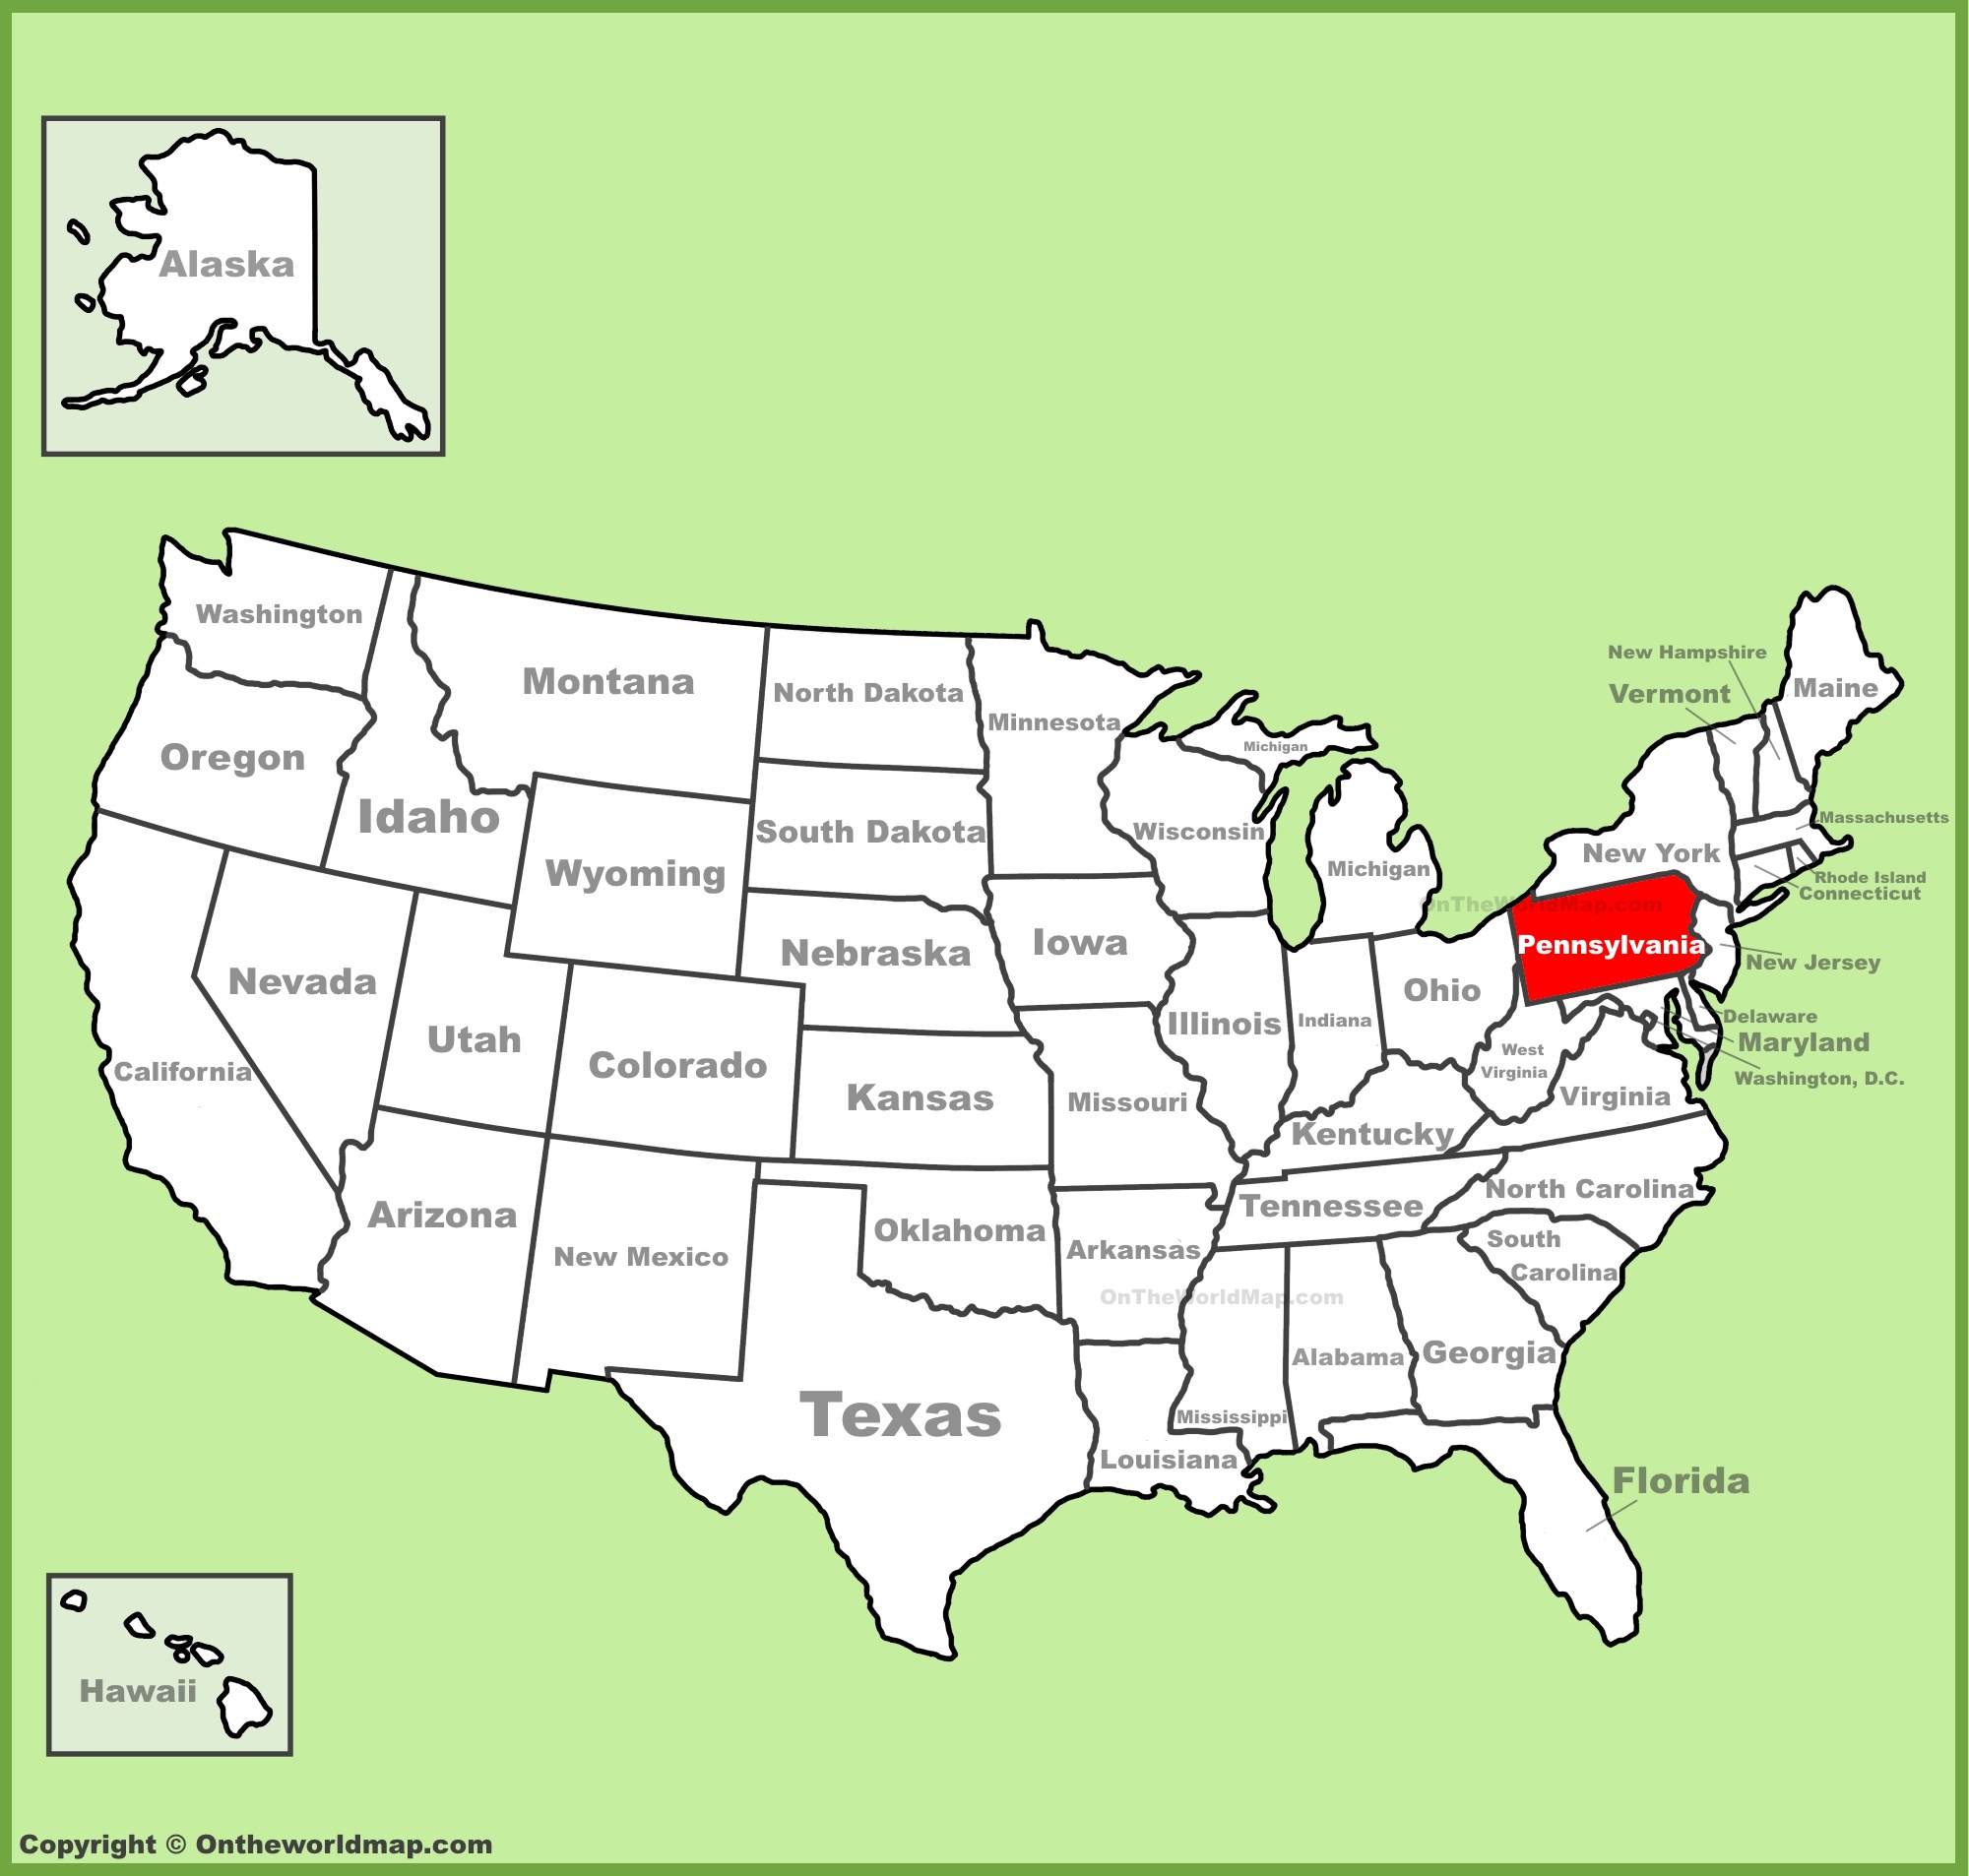 Pennsylvania State Map Usa Maps Of Pennsylvania Pa